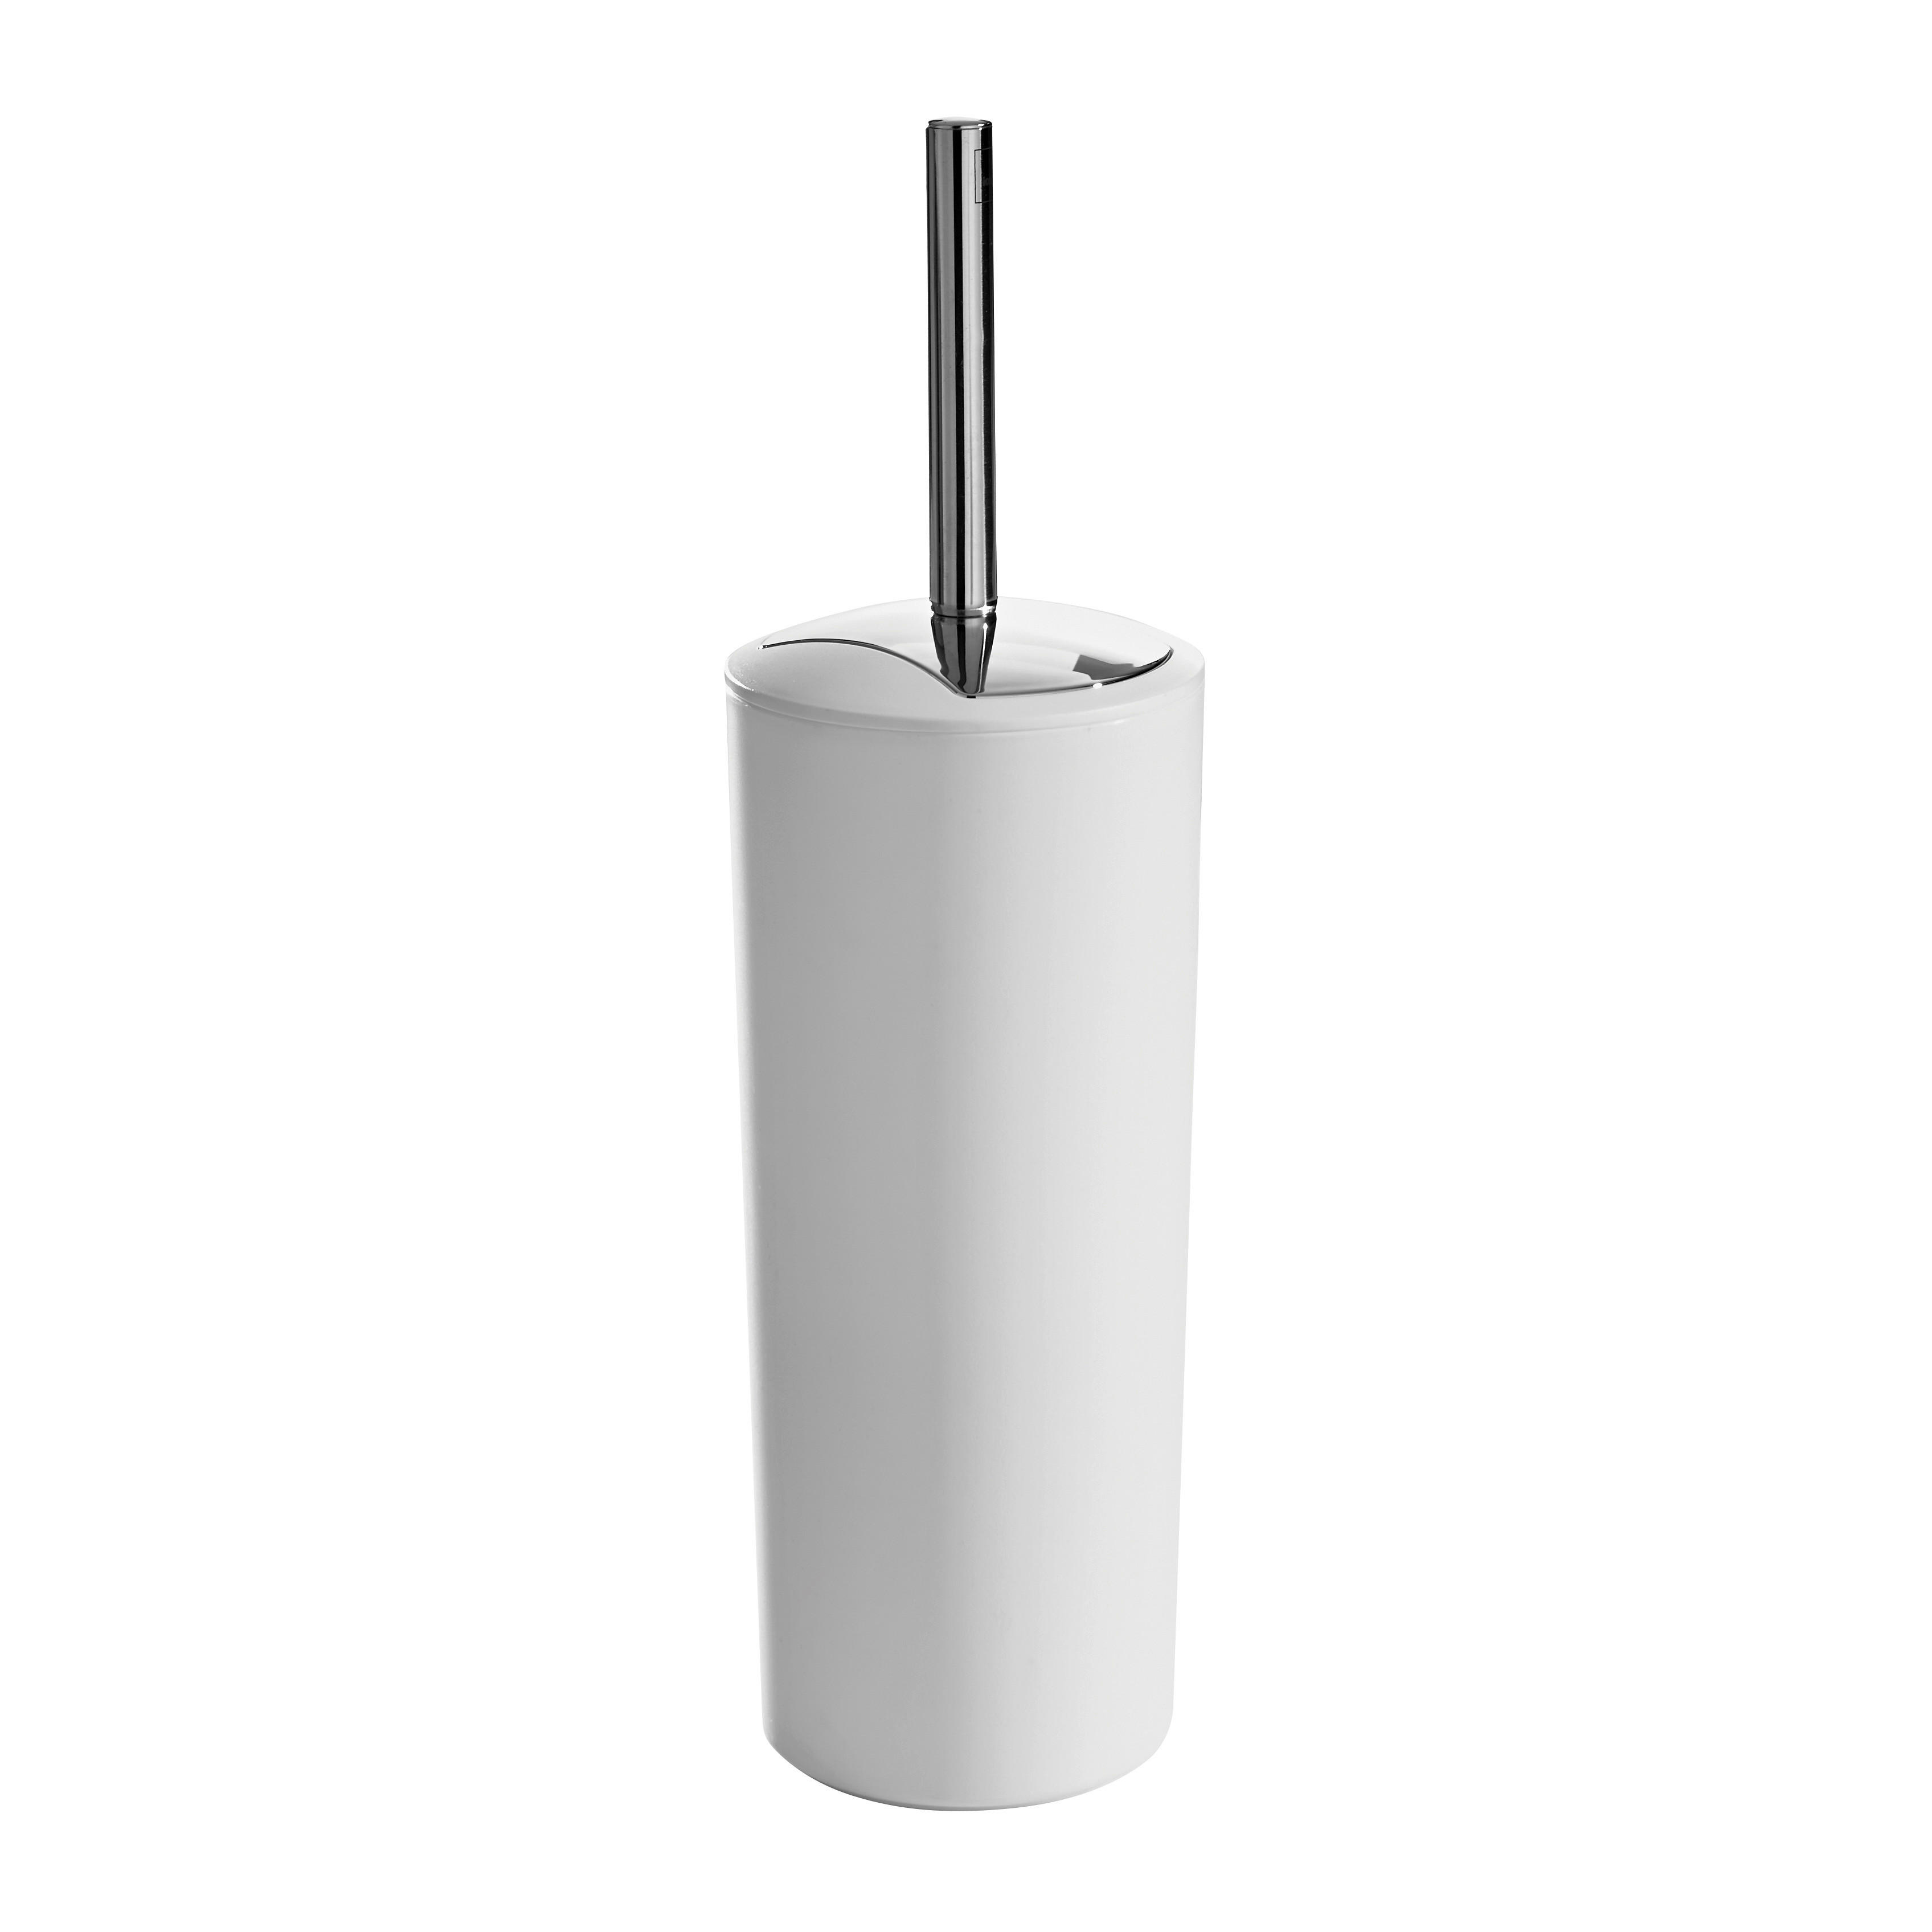 WC-BÜRSTENGARNITUR - Edelstahlfarben/Weiß, Basics, Kunststoff (11/36,5cm) - Kela